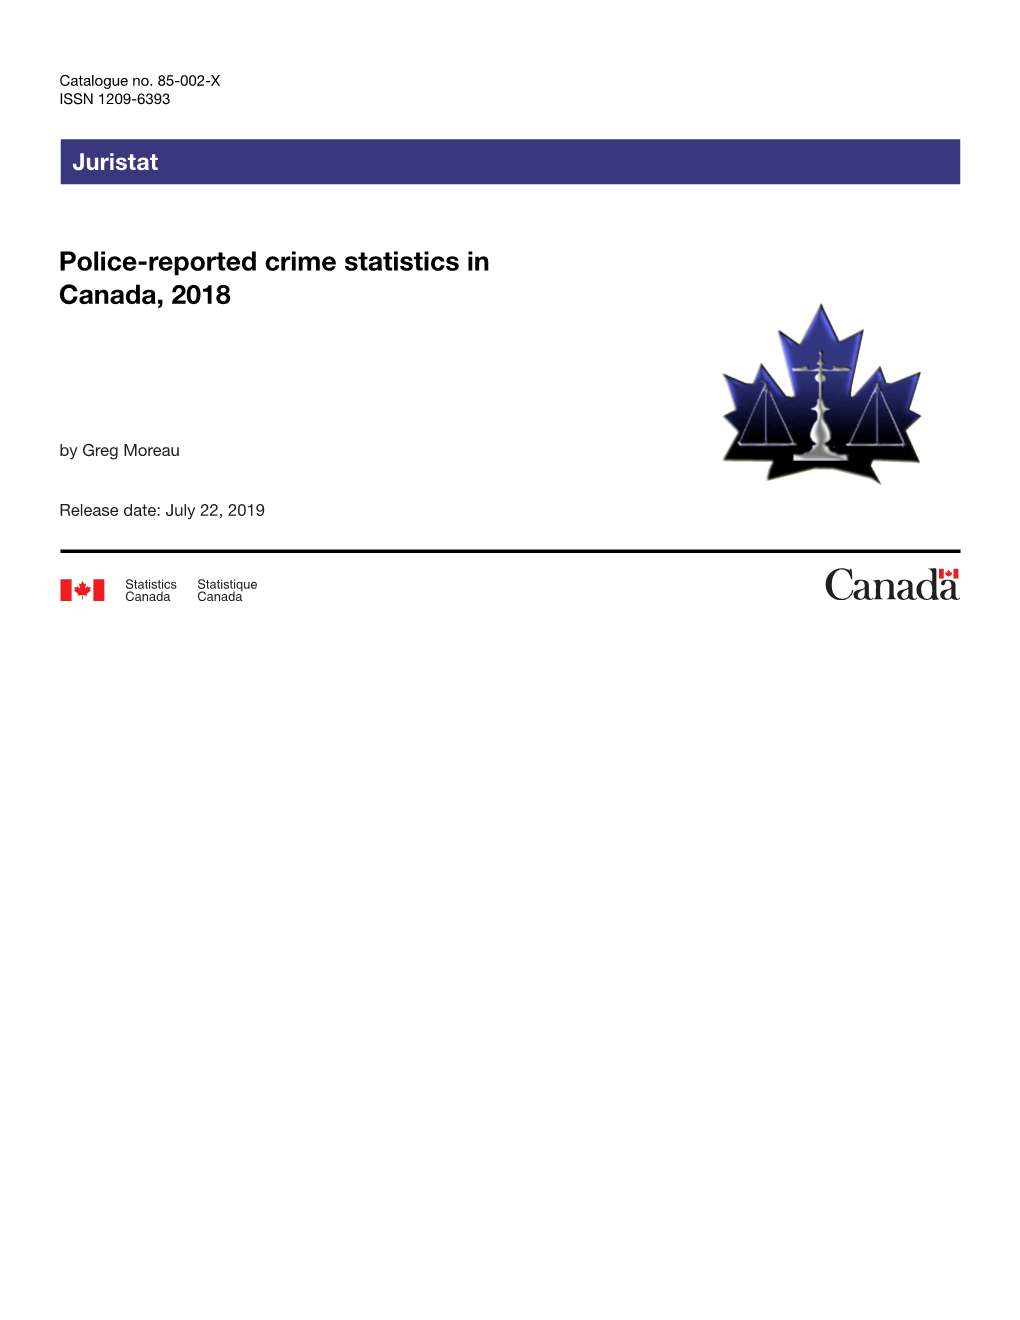 Police-Reported Crime Statistics in Canada, 2018